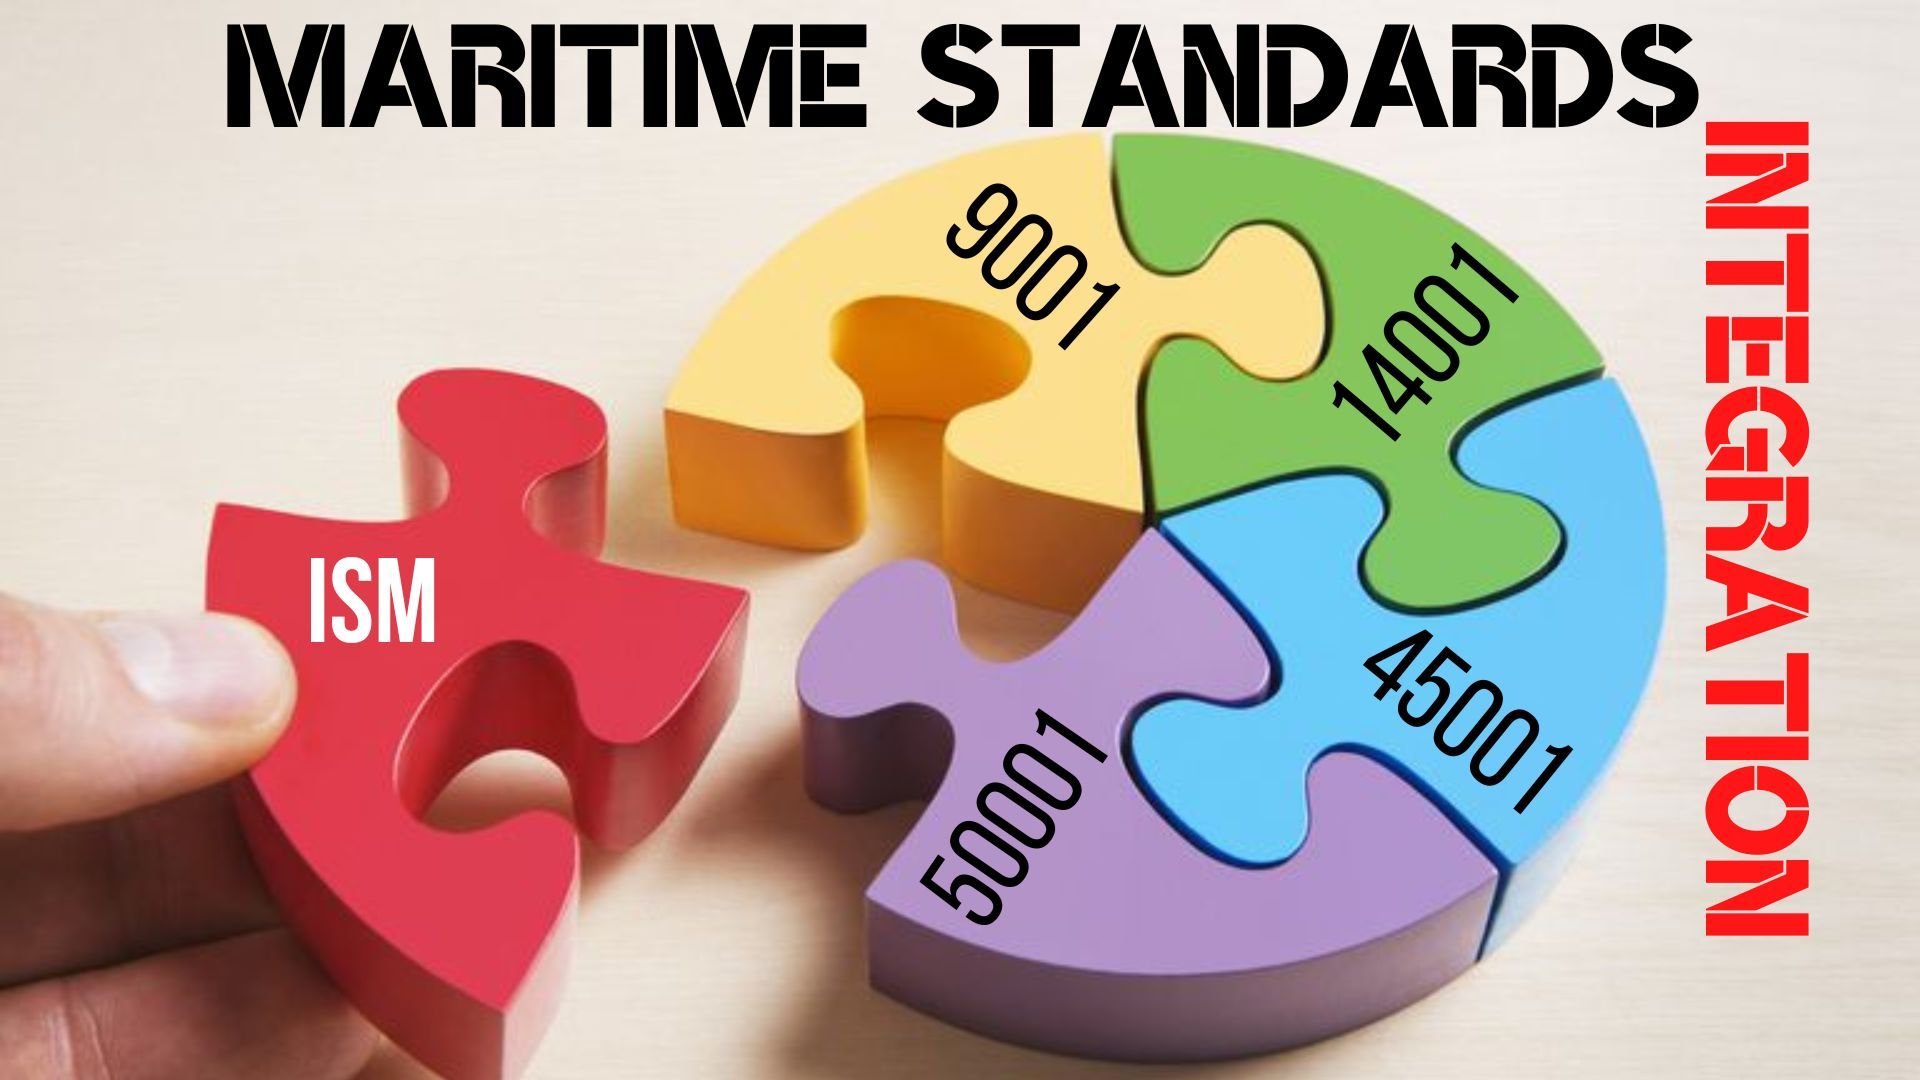 Maritime standards integration